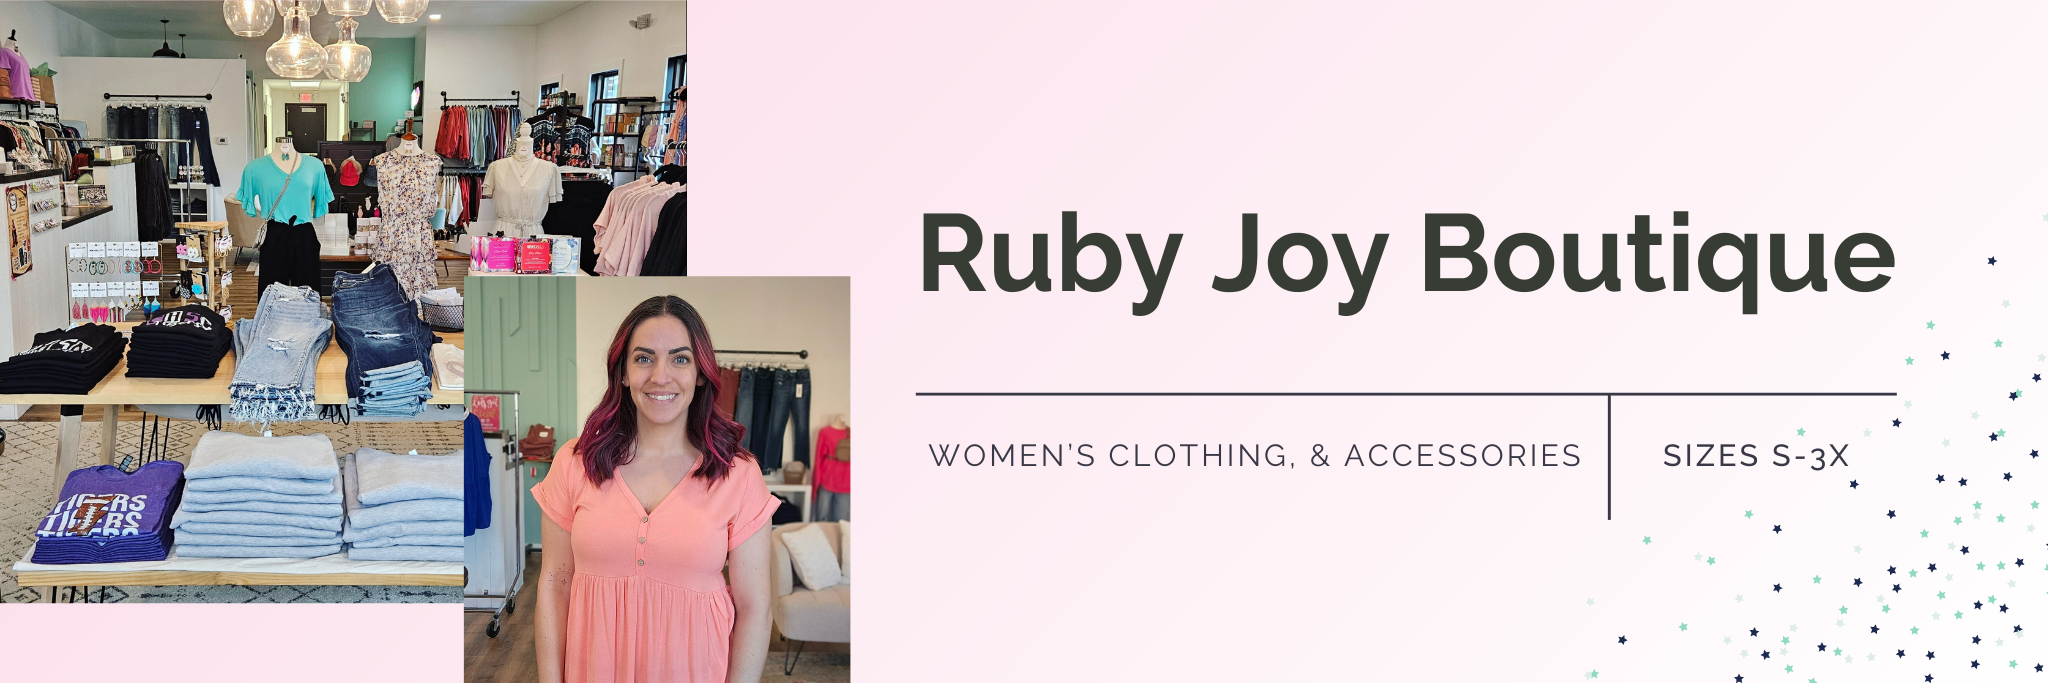 Ruby Joy Boutique | Women's Clothing & Accessories | Sizes S-3X